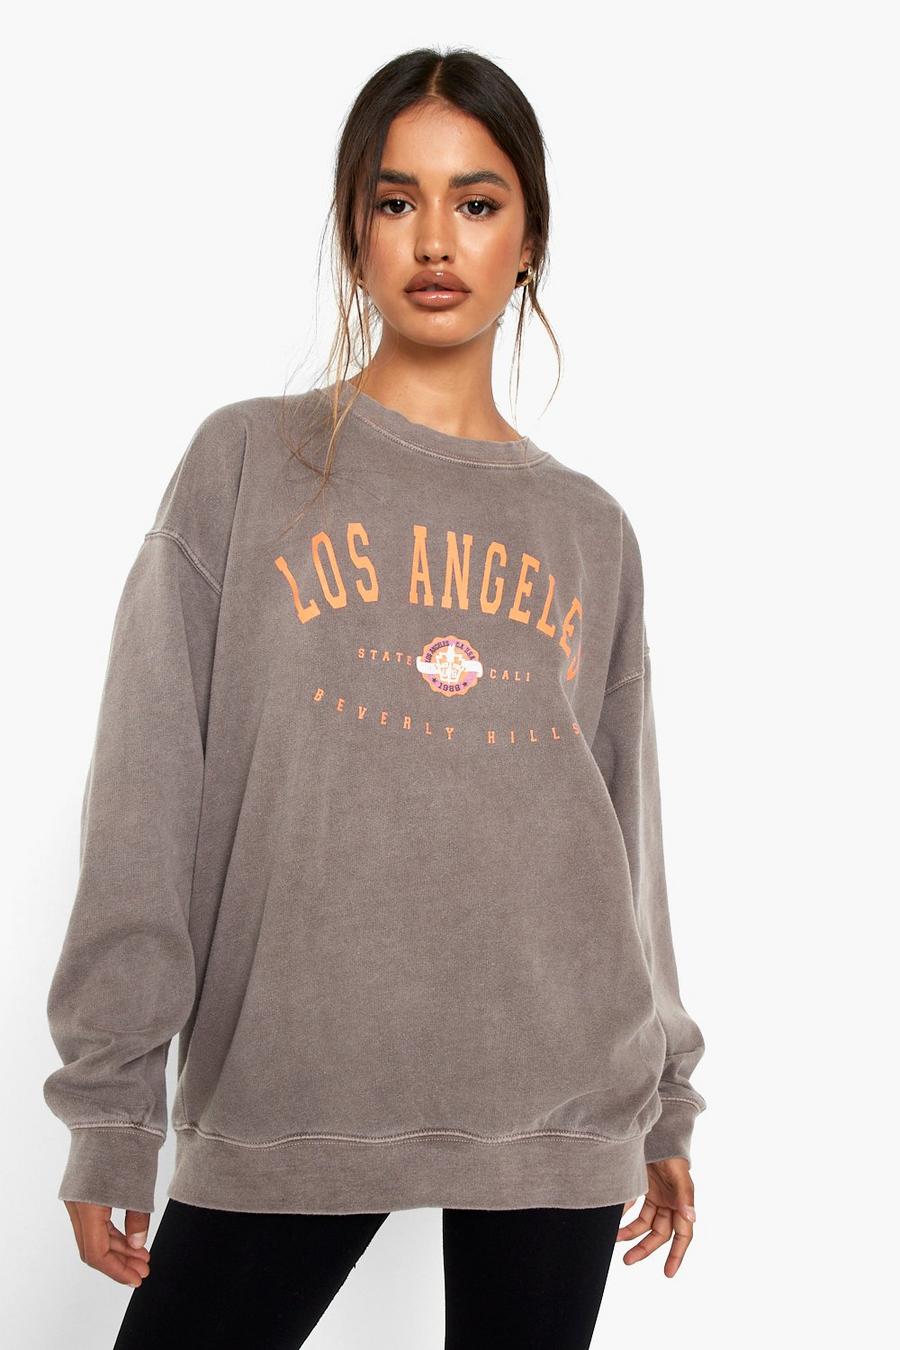  Women Hoodie Stylish Printed Sweatshirt By Angle Curve / Trendy